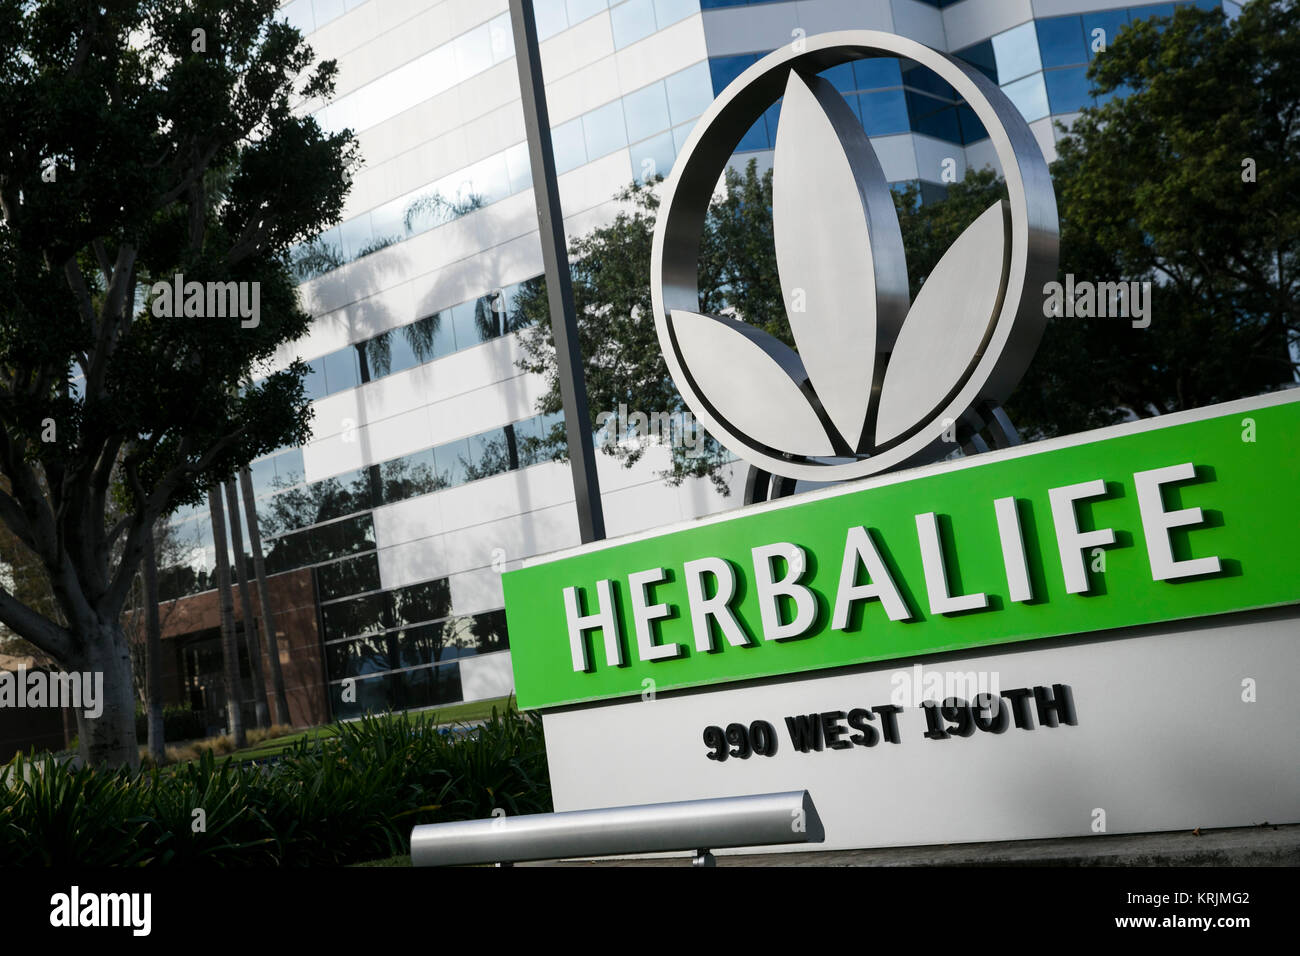 Herbalife: Company Profile